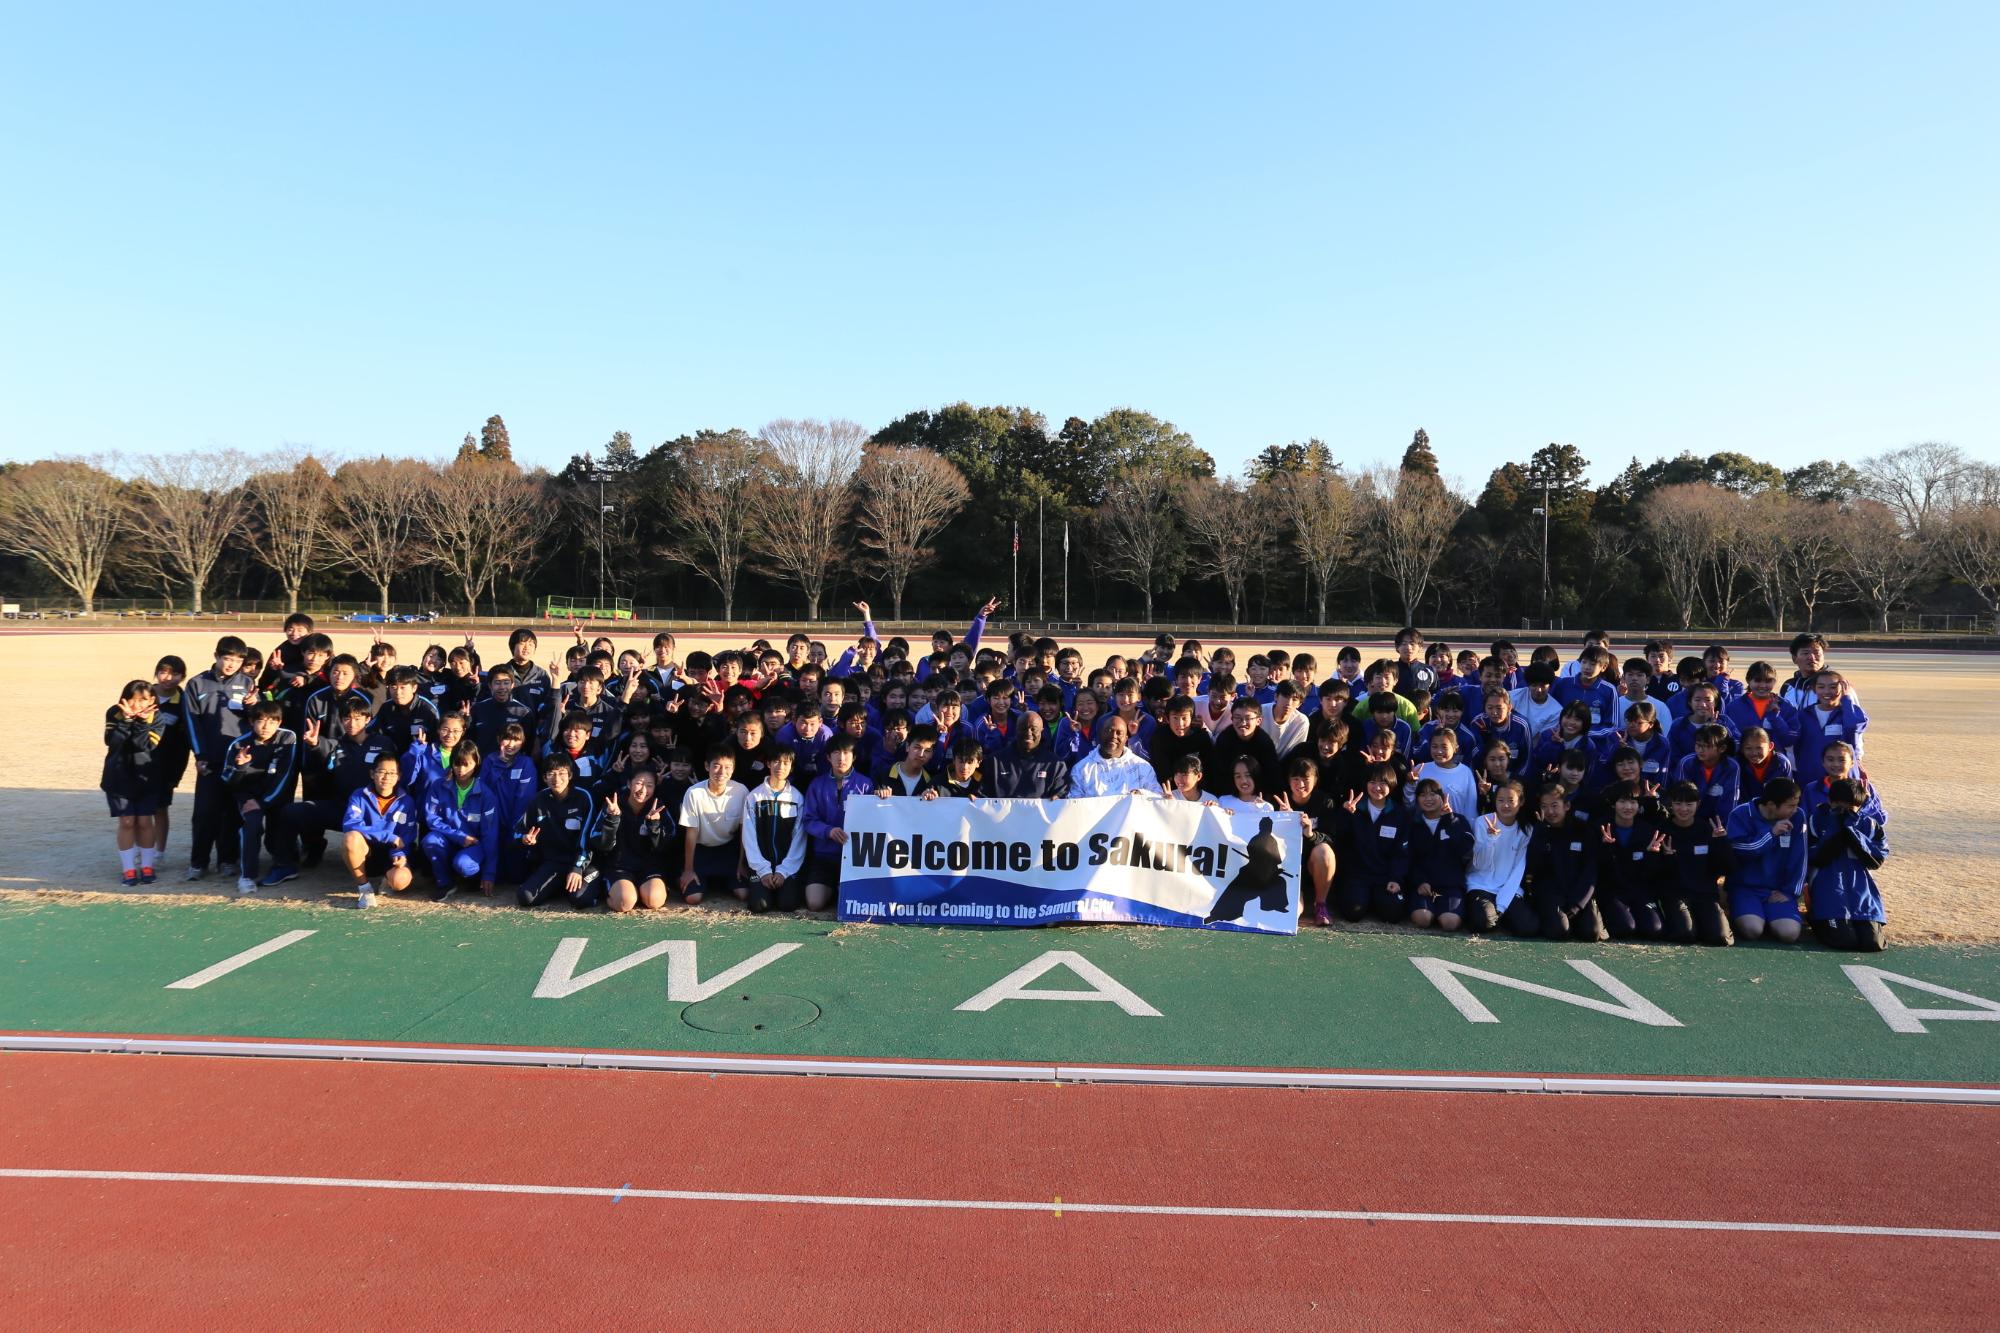 「Welcome to Sakura！」と書かれた横断幕を前に、陸上クリニックの参加者皆さんとアメリカ陸上競技連盟所属コーチの方々が集まって写っている集合写真